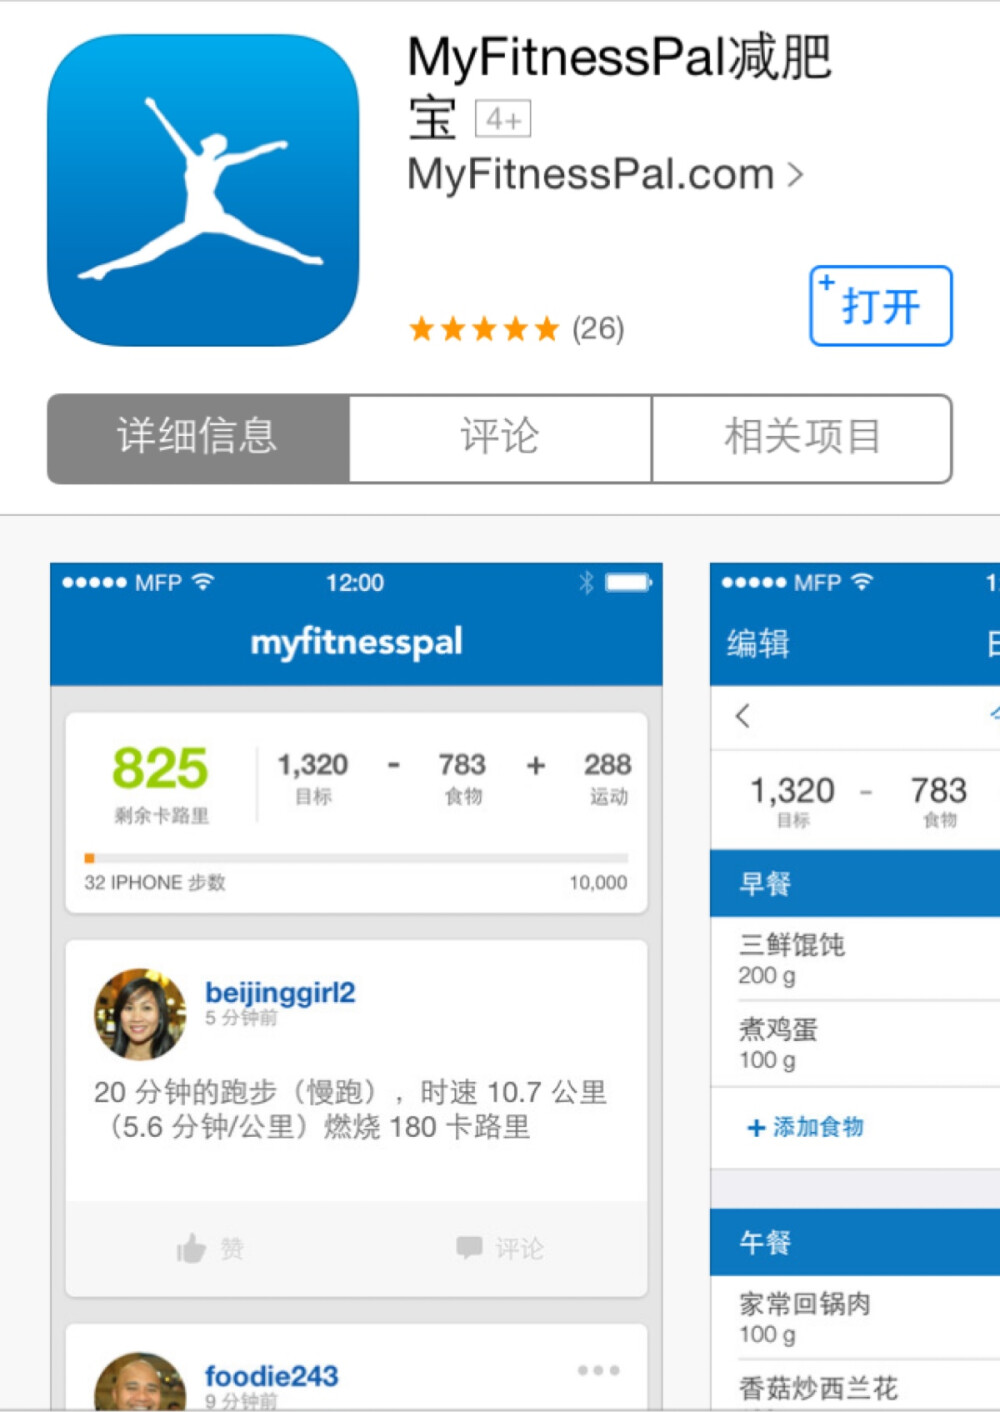 #app推荐 中文名字很二，但是确实是很好用很专业的体型管理应用 比薄荷减肥那个好用 推荐